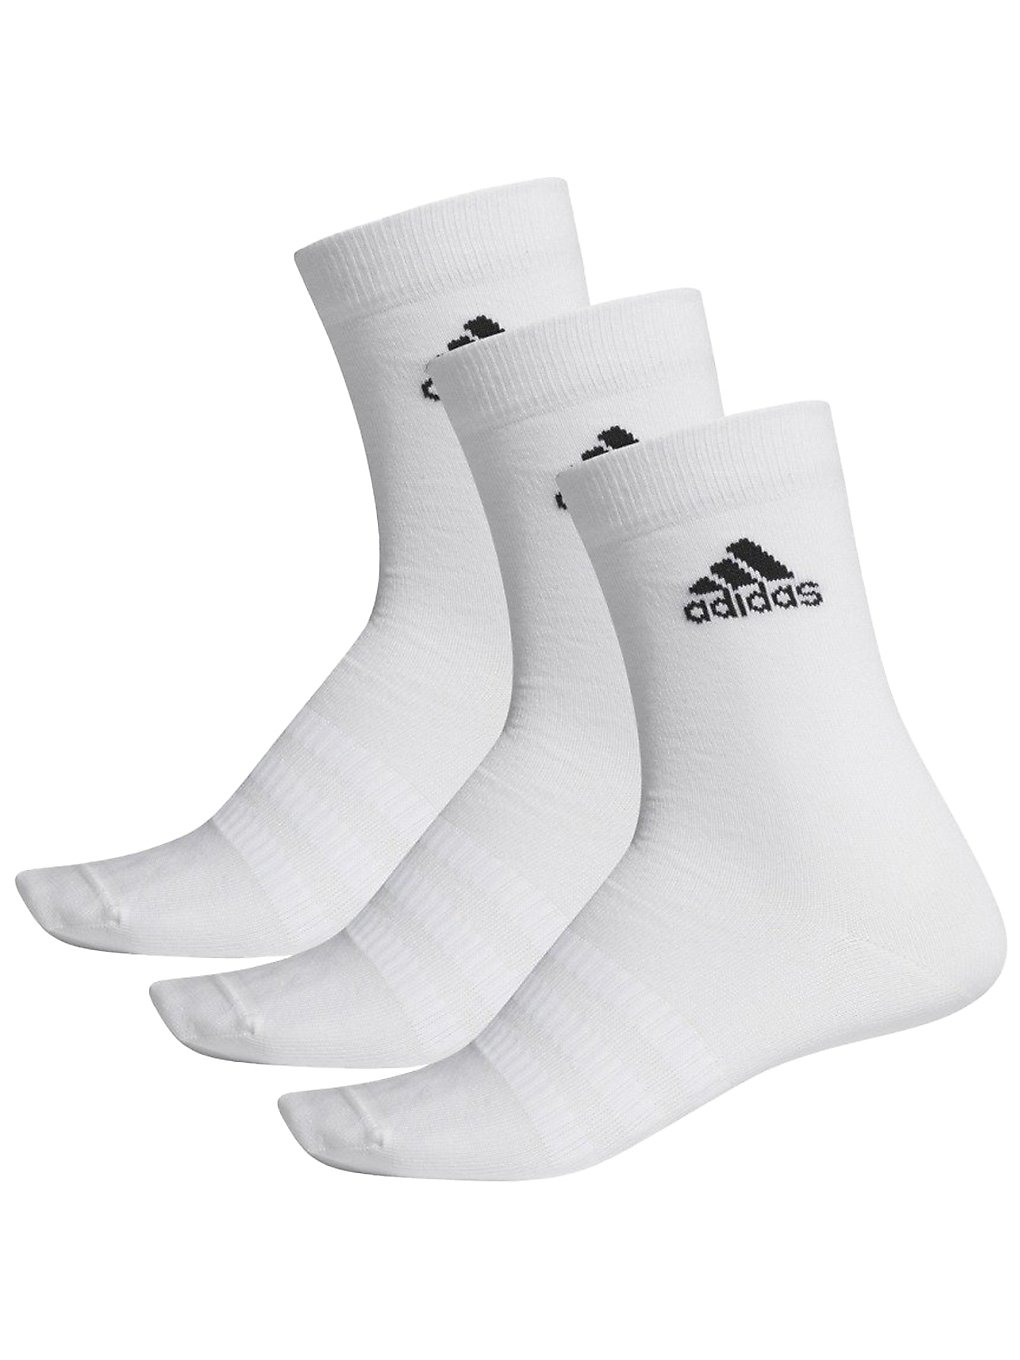 Adidas Originals Light Crew 3PP Socks white/white/white